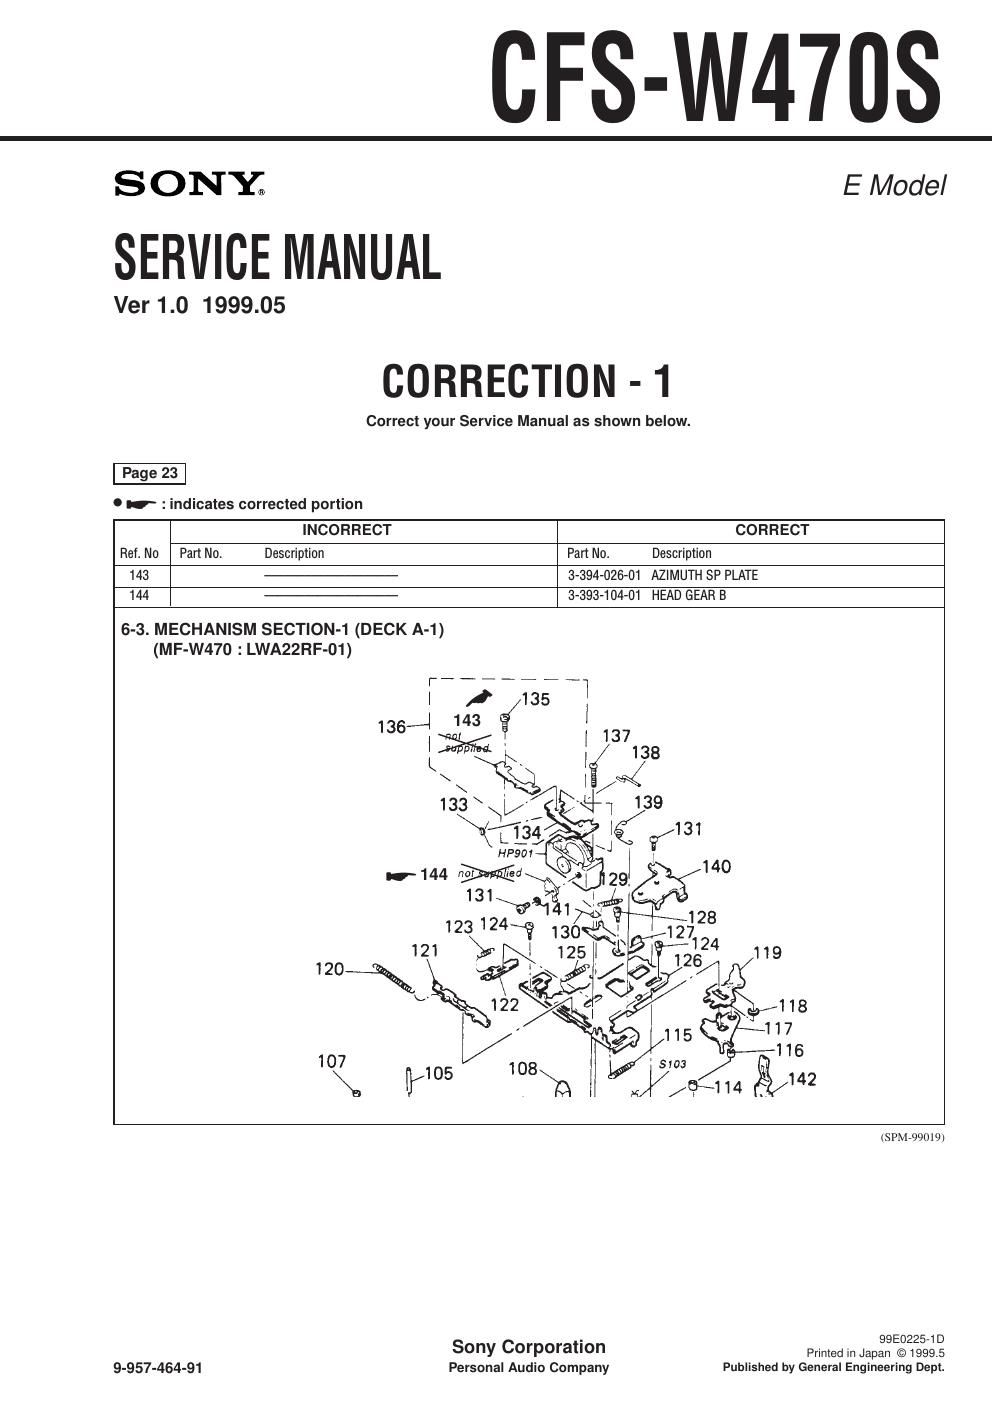 sony cfs w 470 s service manual